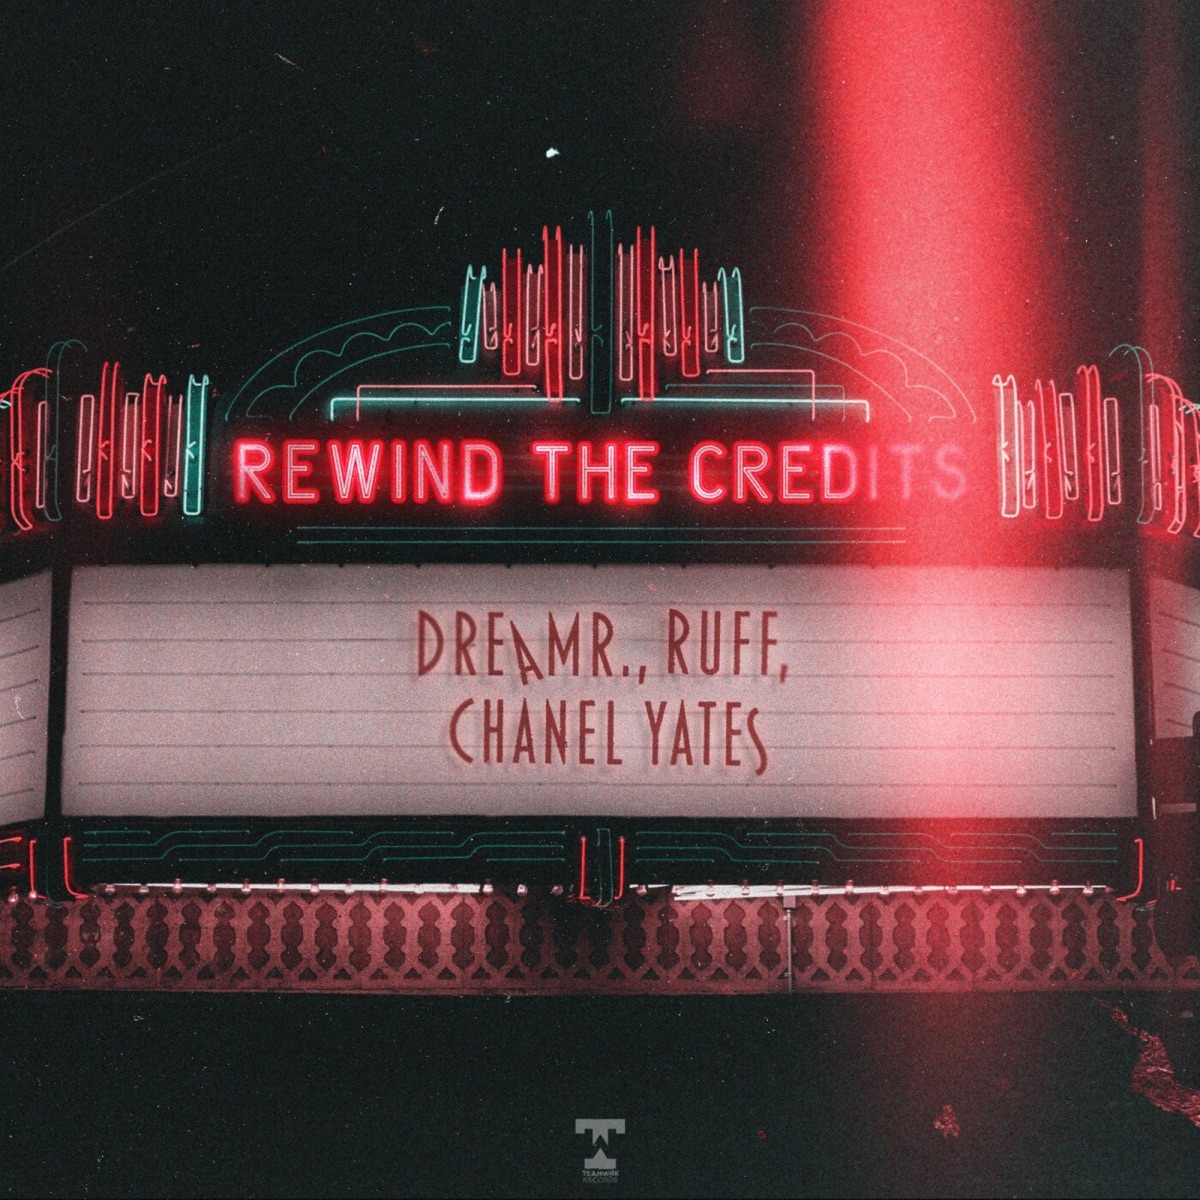 Summer Of '16 - Single - Album by dreamr., Ruff & Chanel Yates - Apple Music